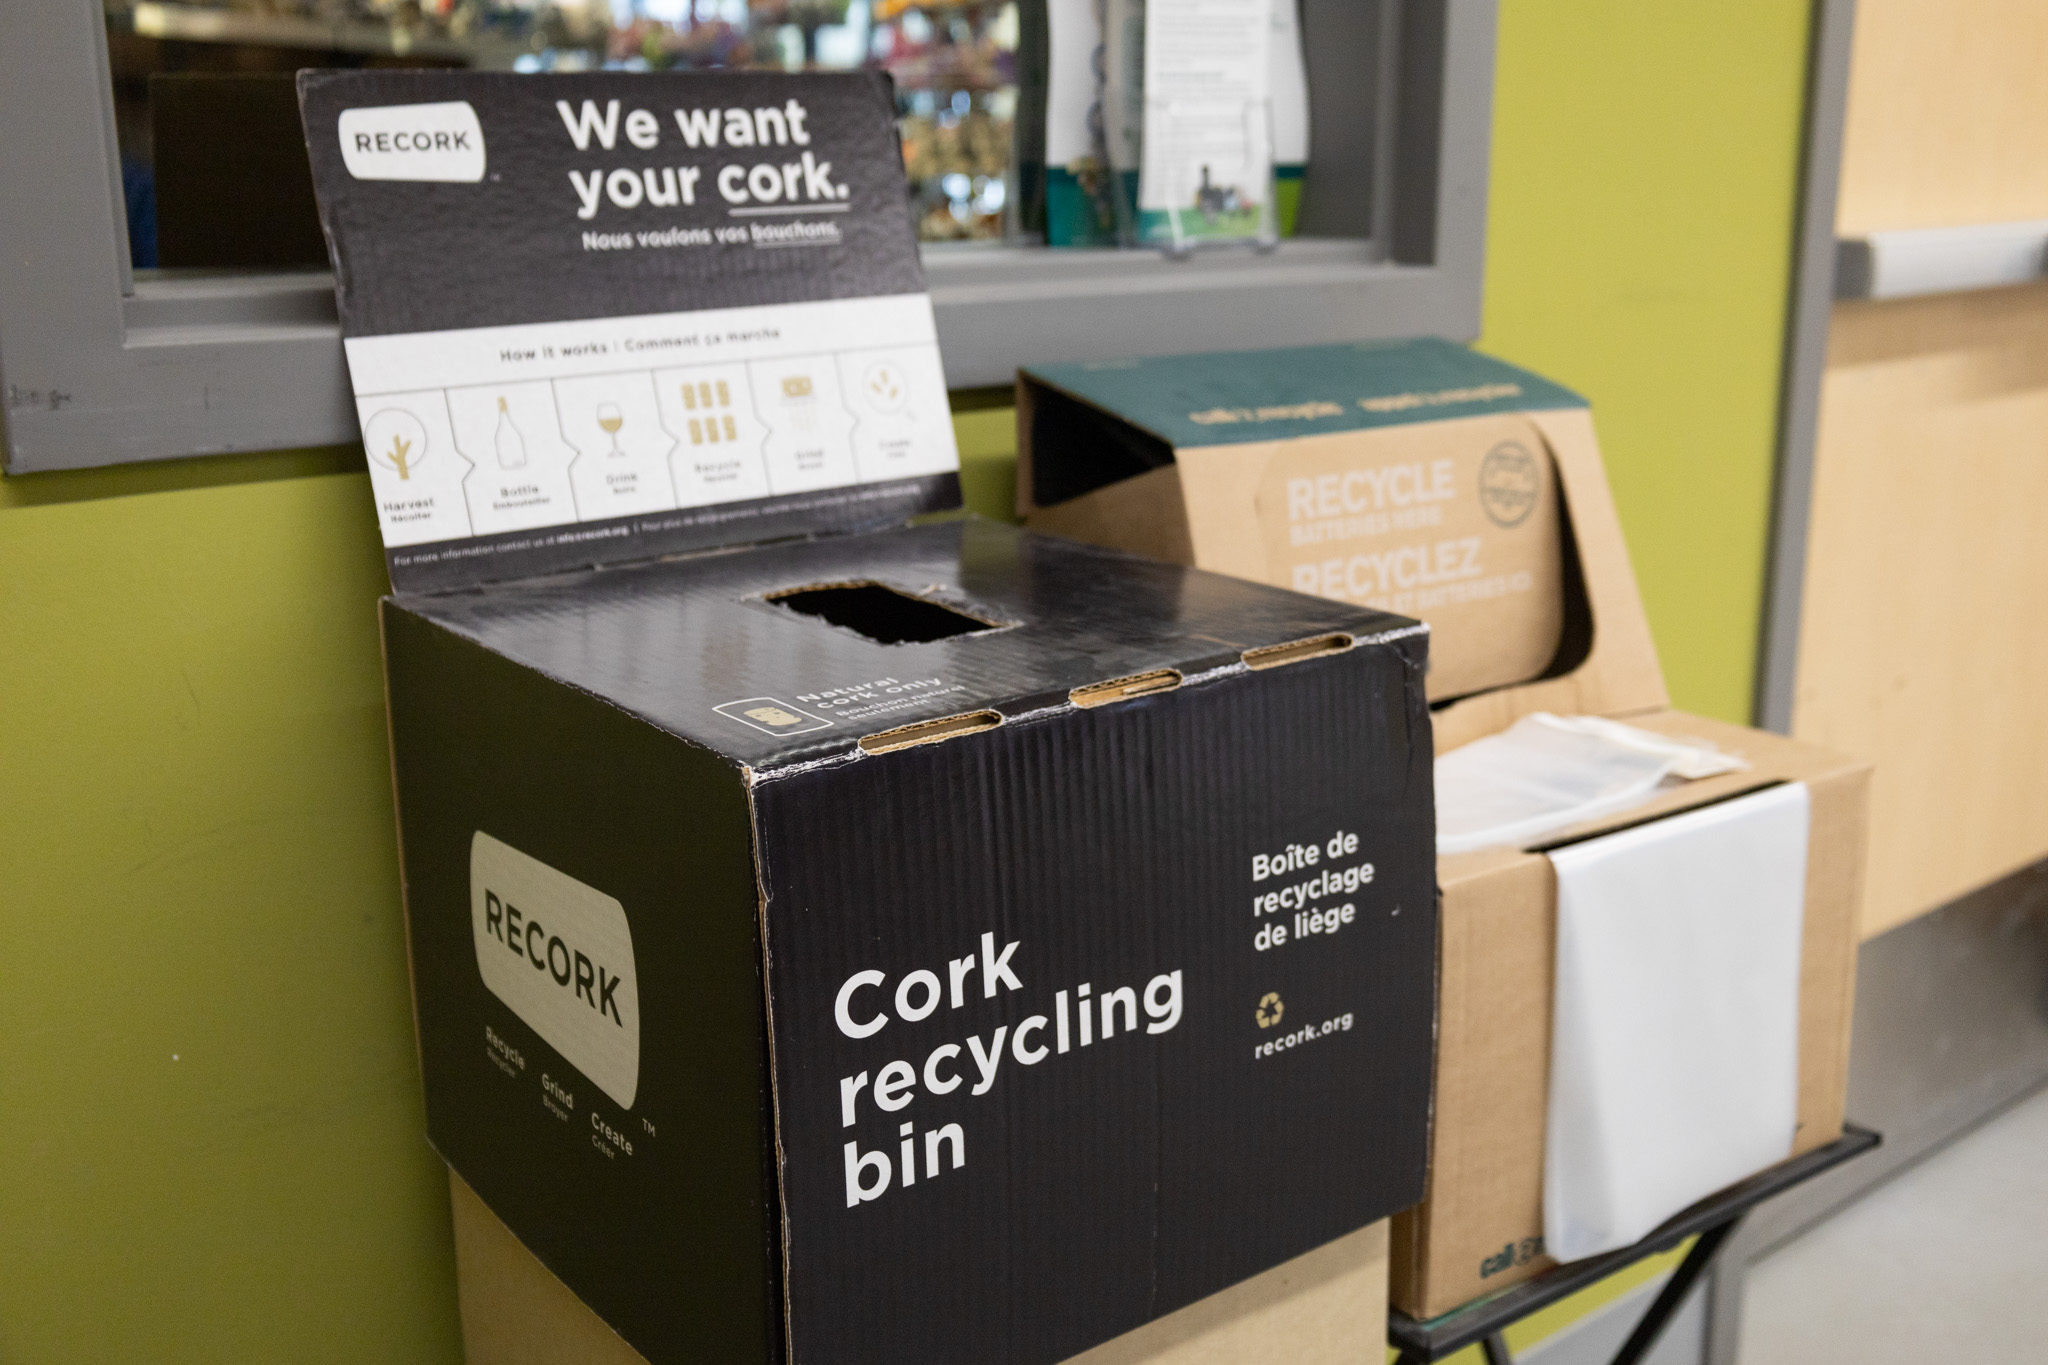 Cork recycling box